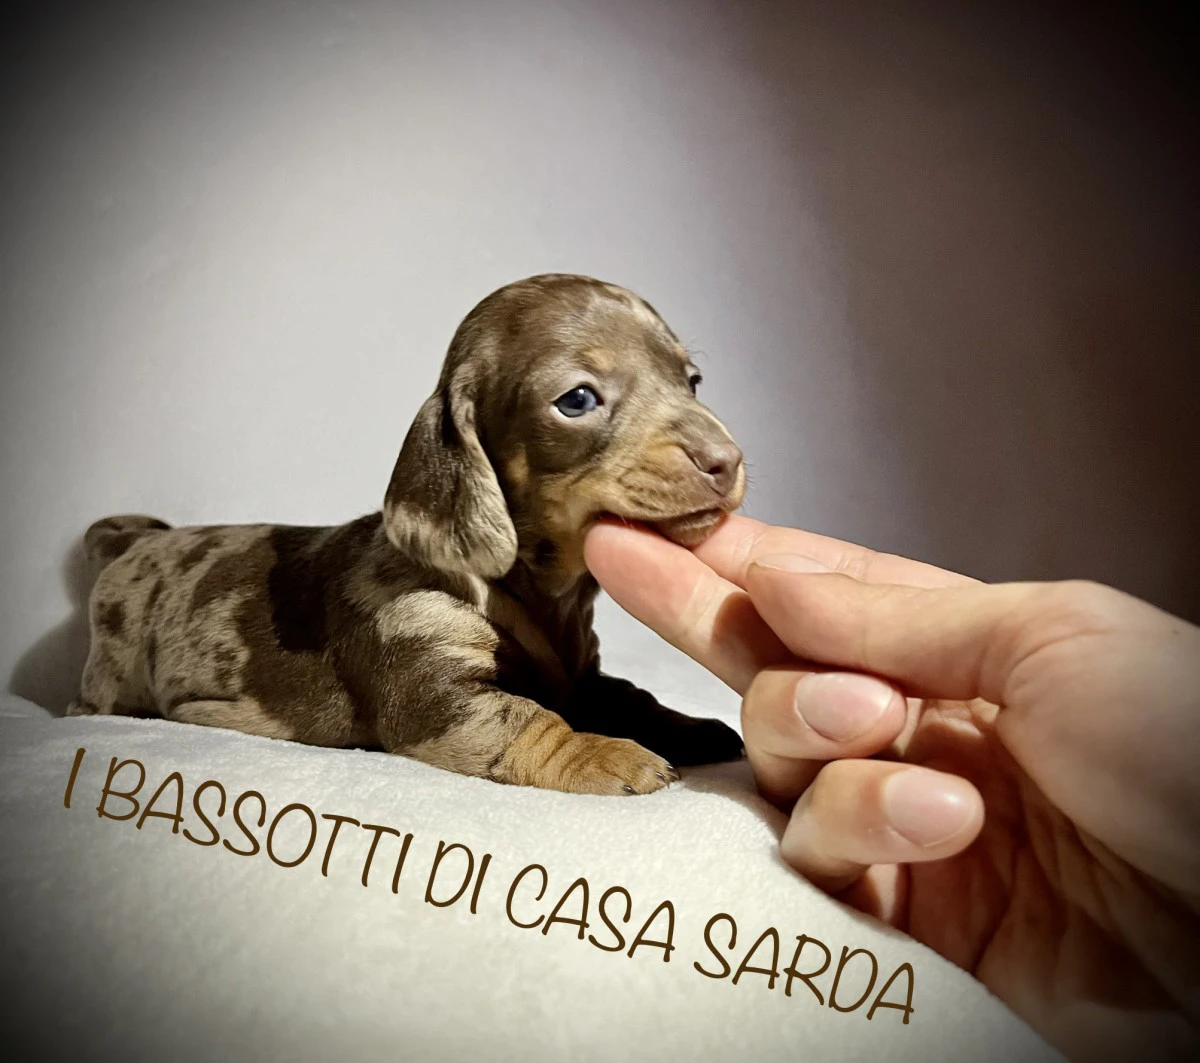 I BASSOTTI DI CASA SARDA 
BAS | Foto 4